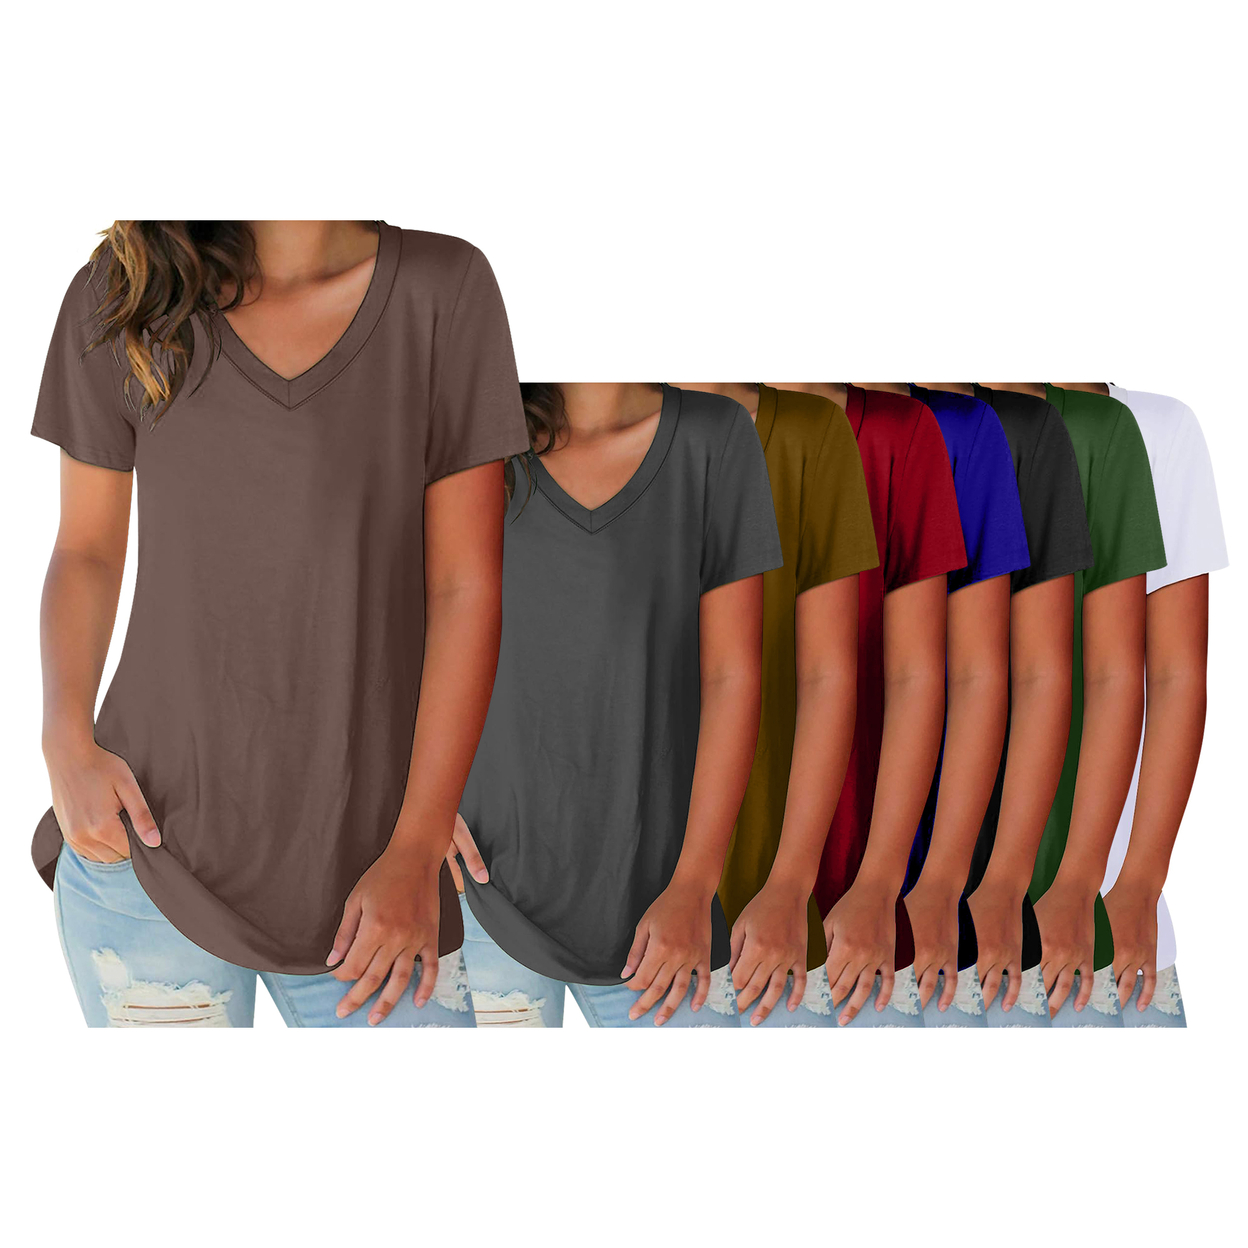 3-Pack: Women's Ultra Soft Smooth Cotton Blend Basic V-Neck Short Sleeve Shirts - Black Grey, Red, Medium